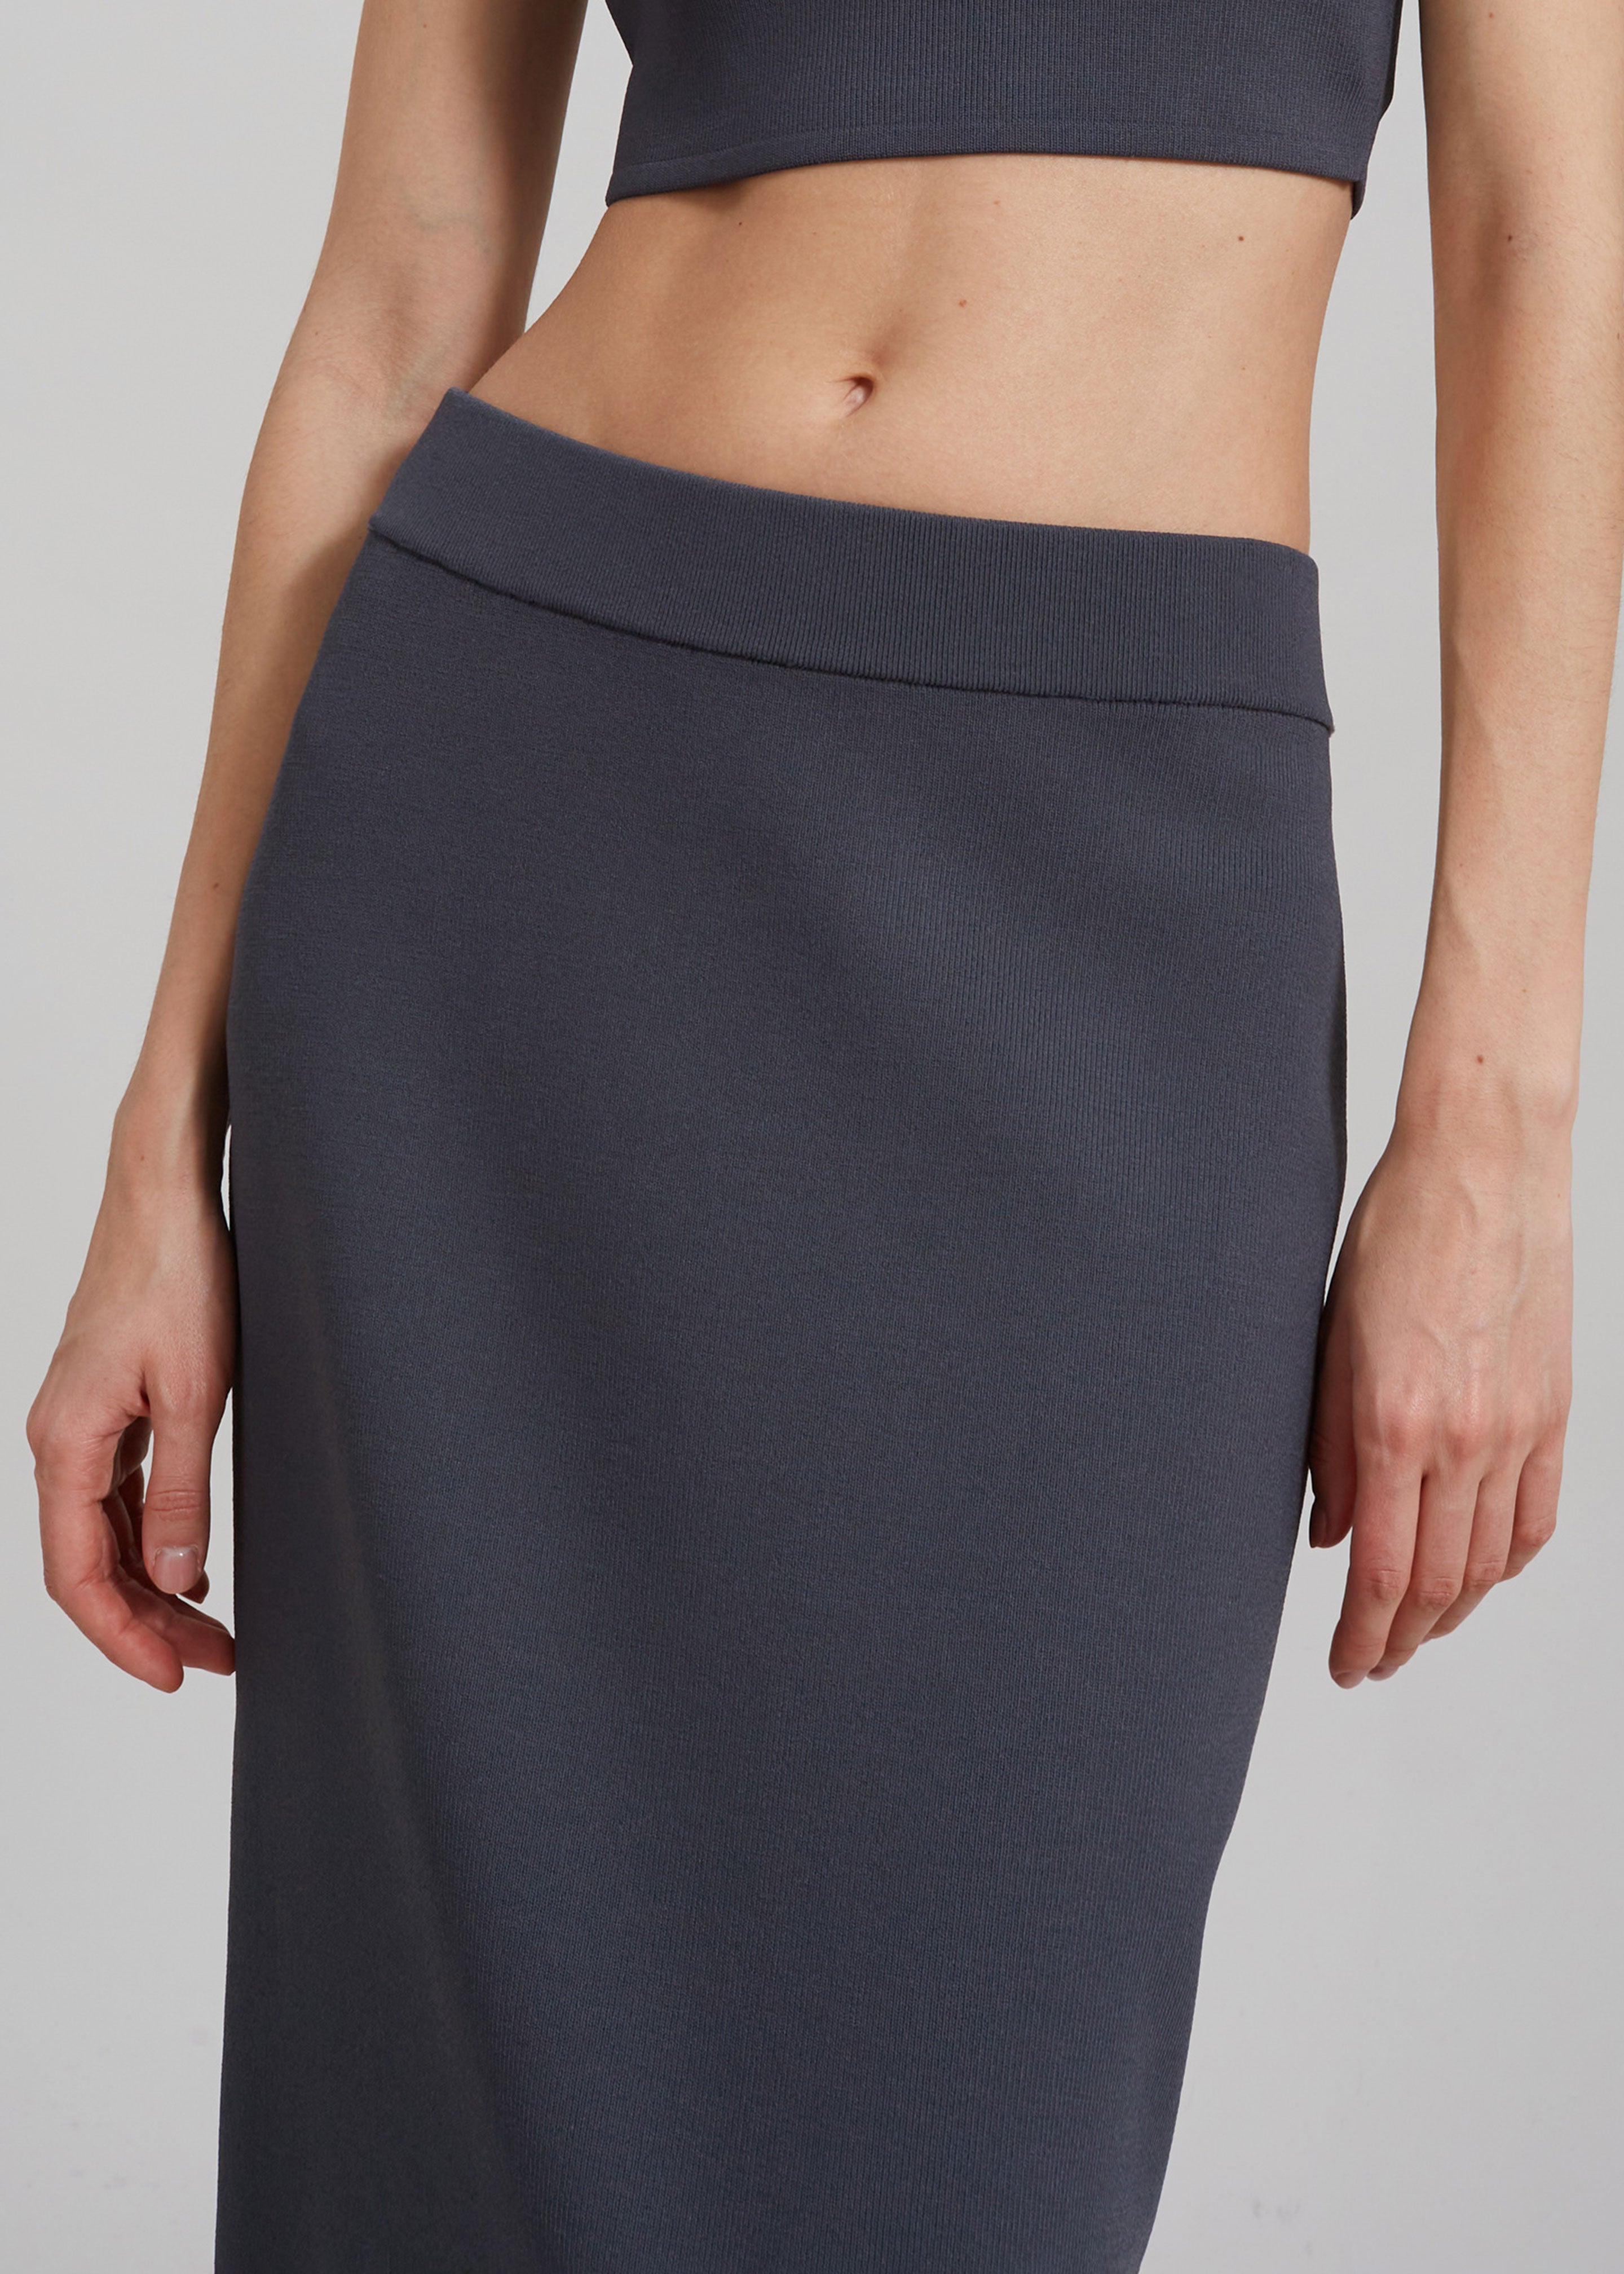 Solange Knit Pencil Skirt - Grey - 5